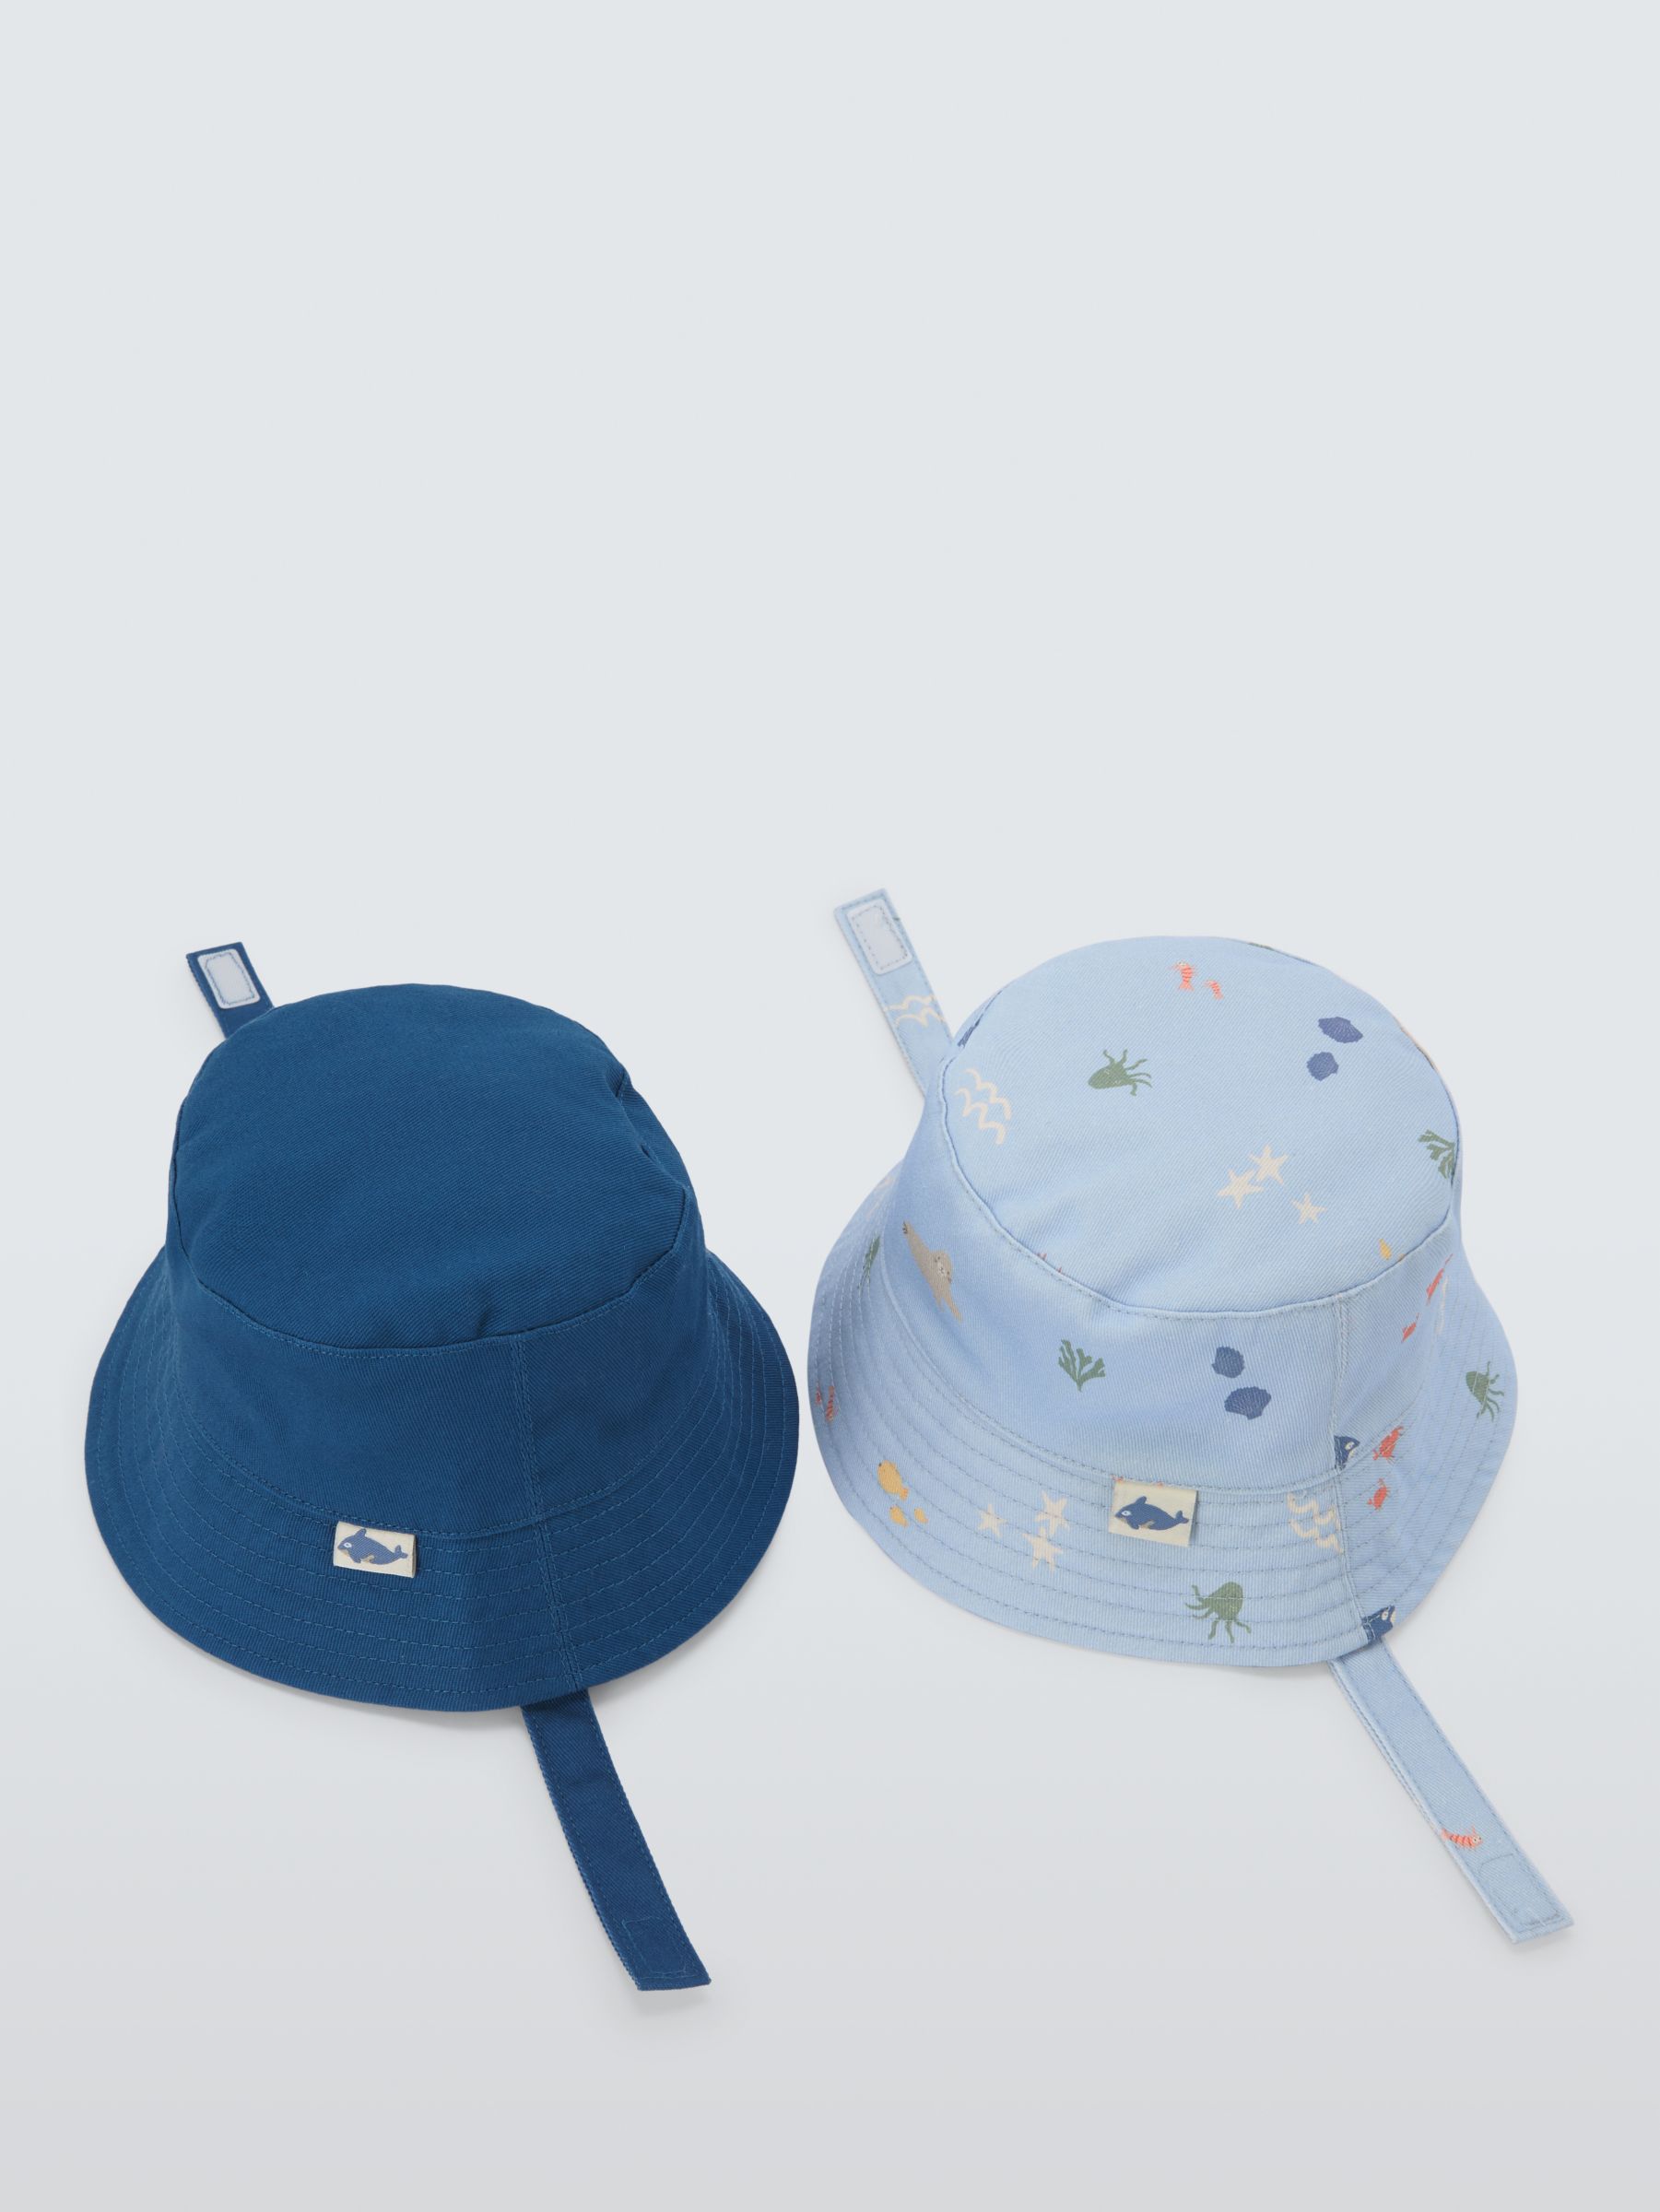 John Lewis Baby Cotton Sea Print Bucket Hat, Pack of 2, Multi, 6-12 months